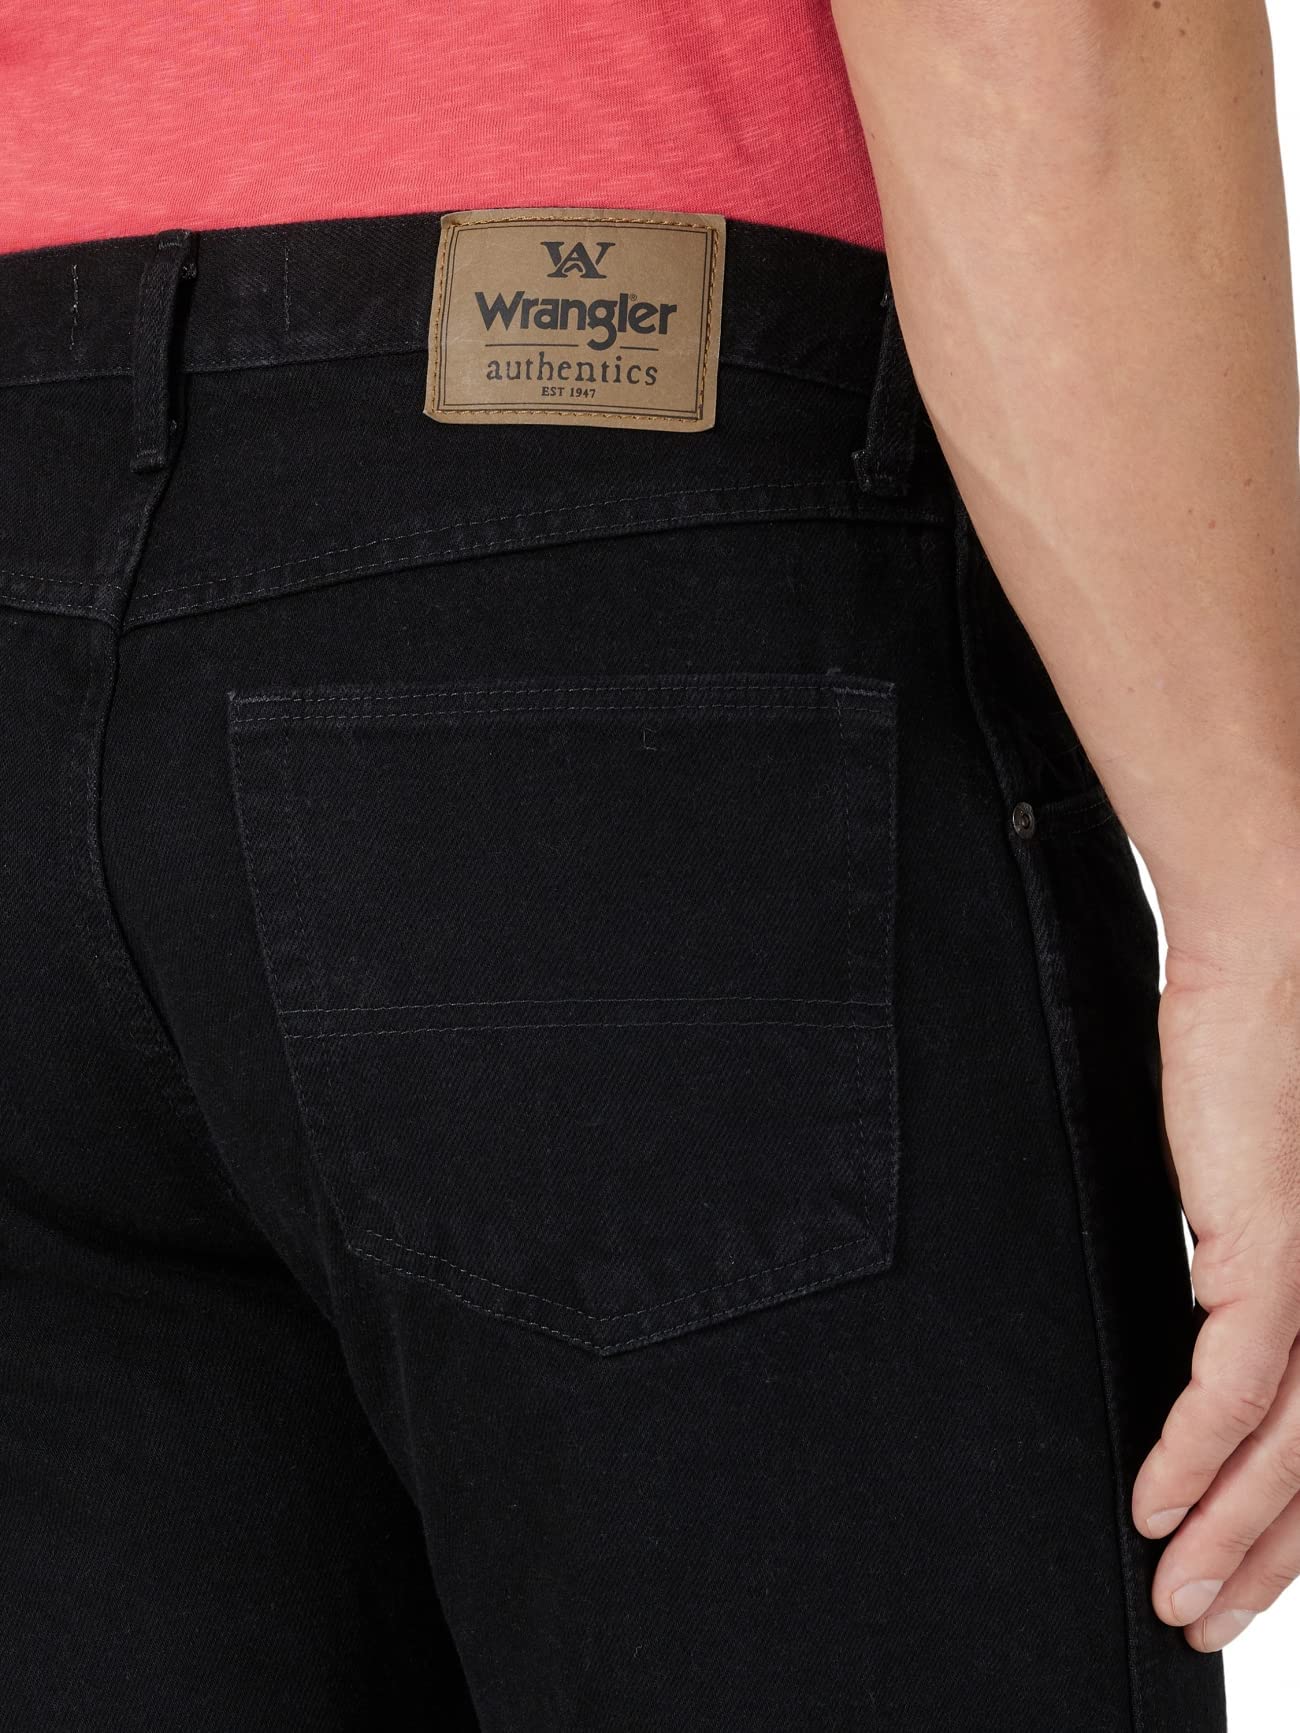 Wrangler Authentics Men's Classic 5-Pocket Regular Fit Cotton Jean, Black, 42W x 32L